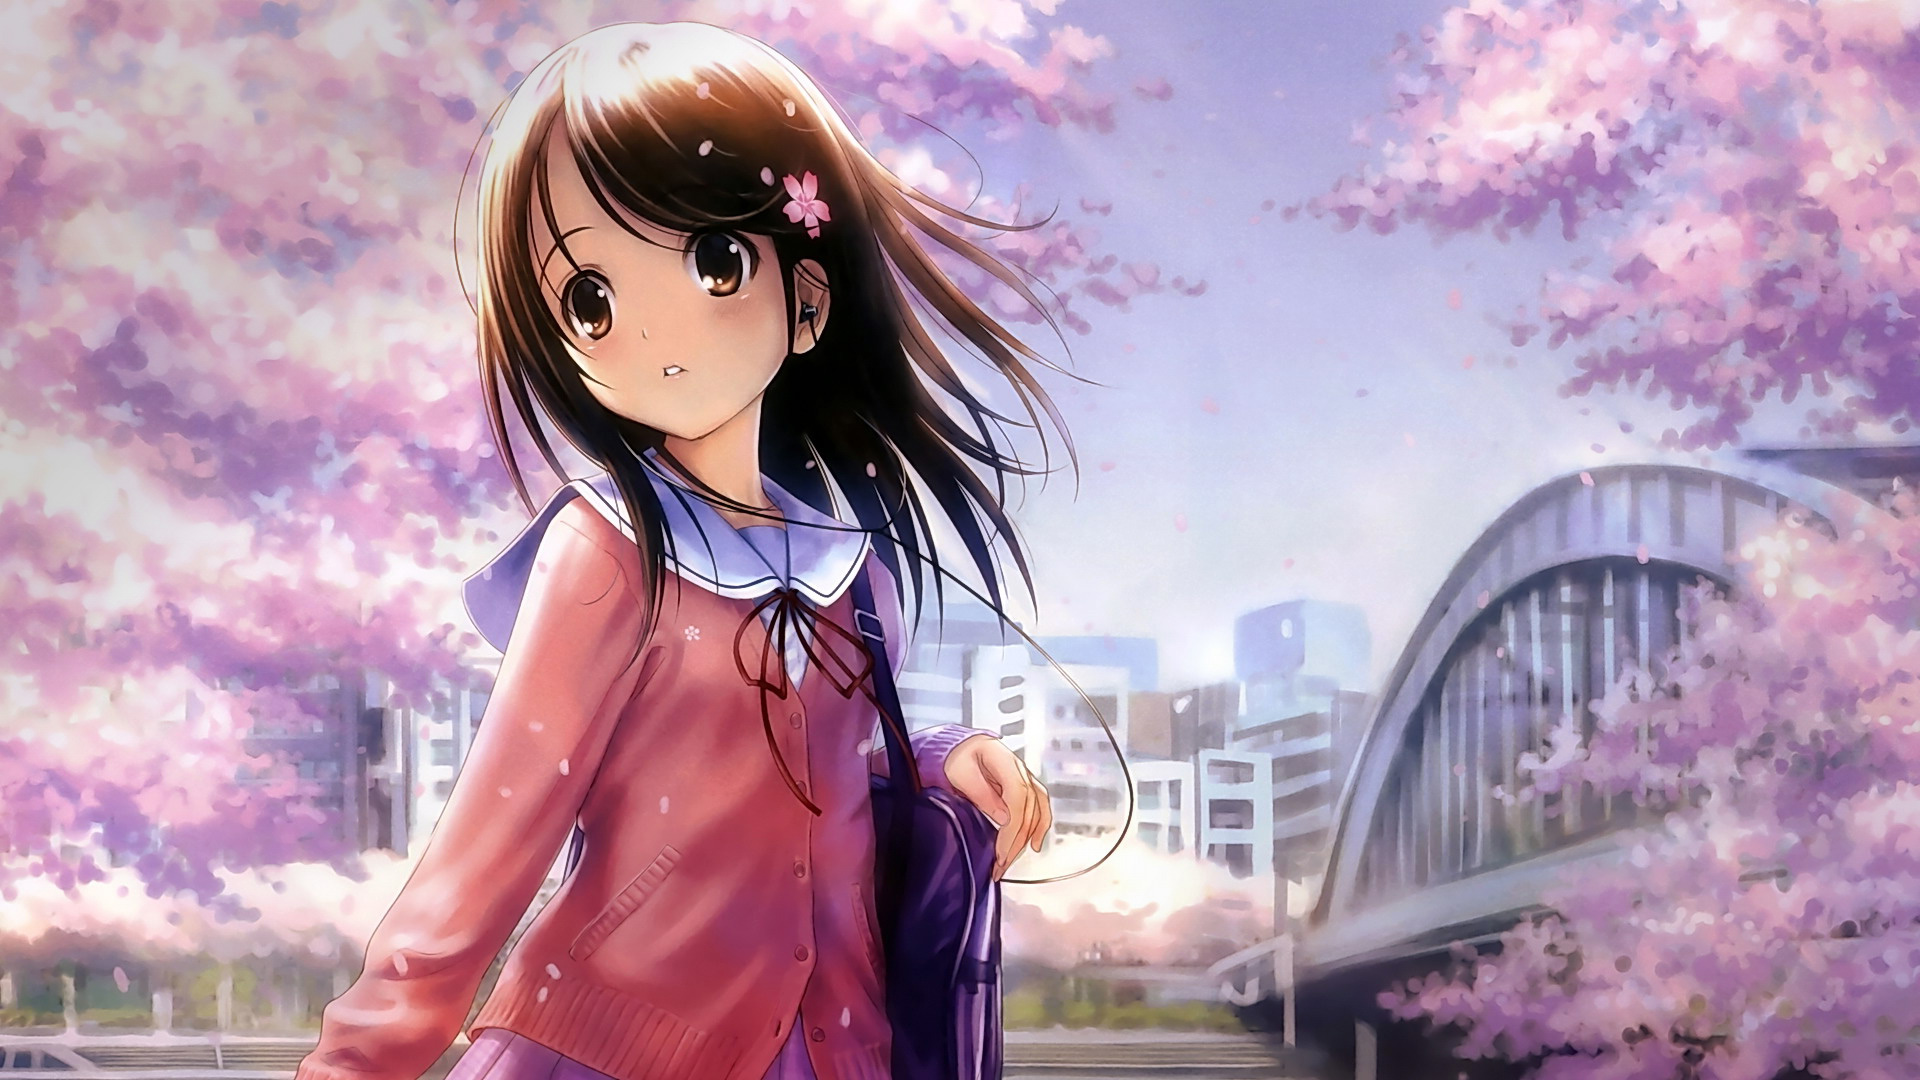 Anime Schoolgirl Full hd wallpaper 1080p pink